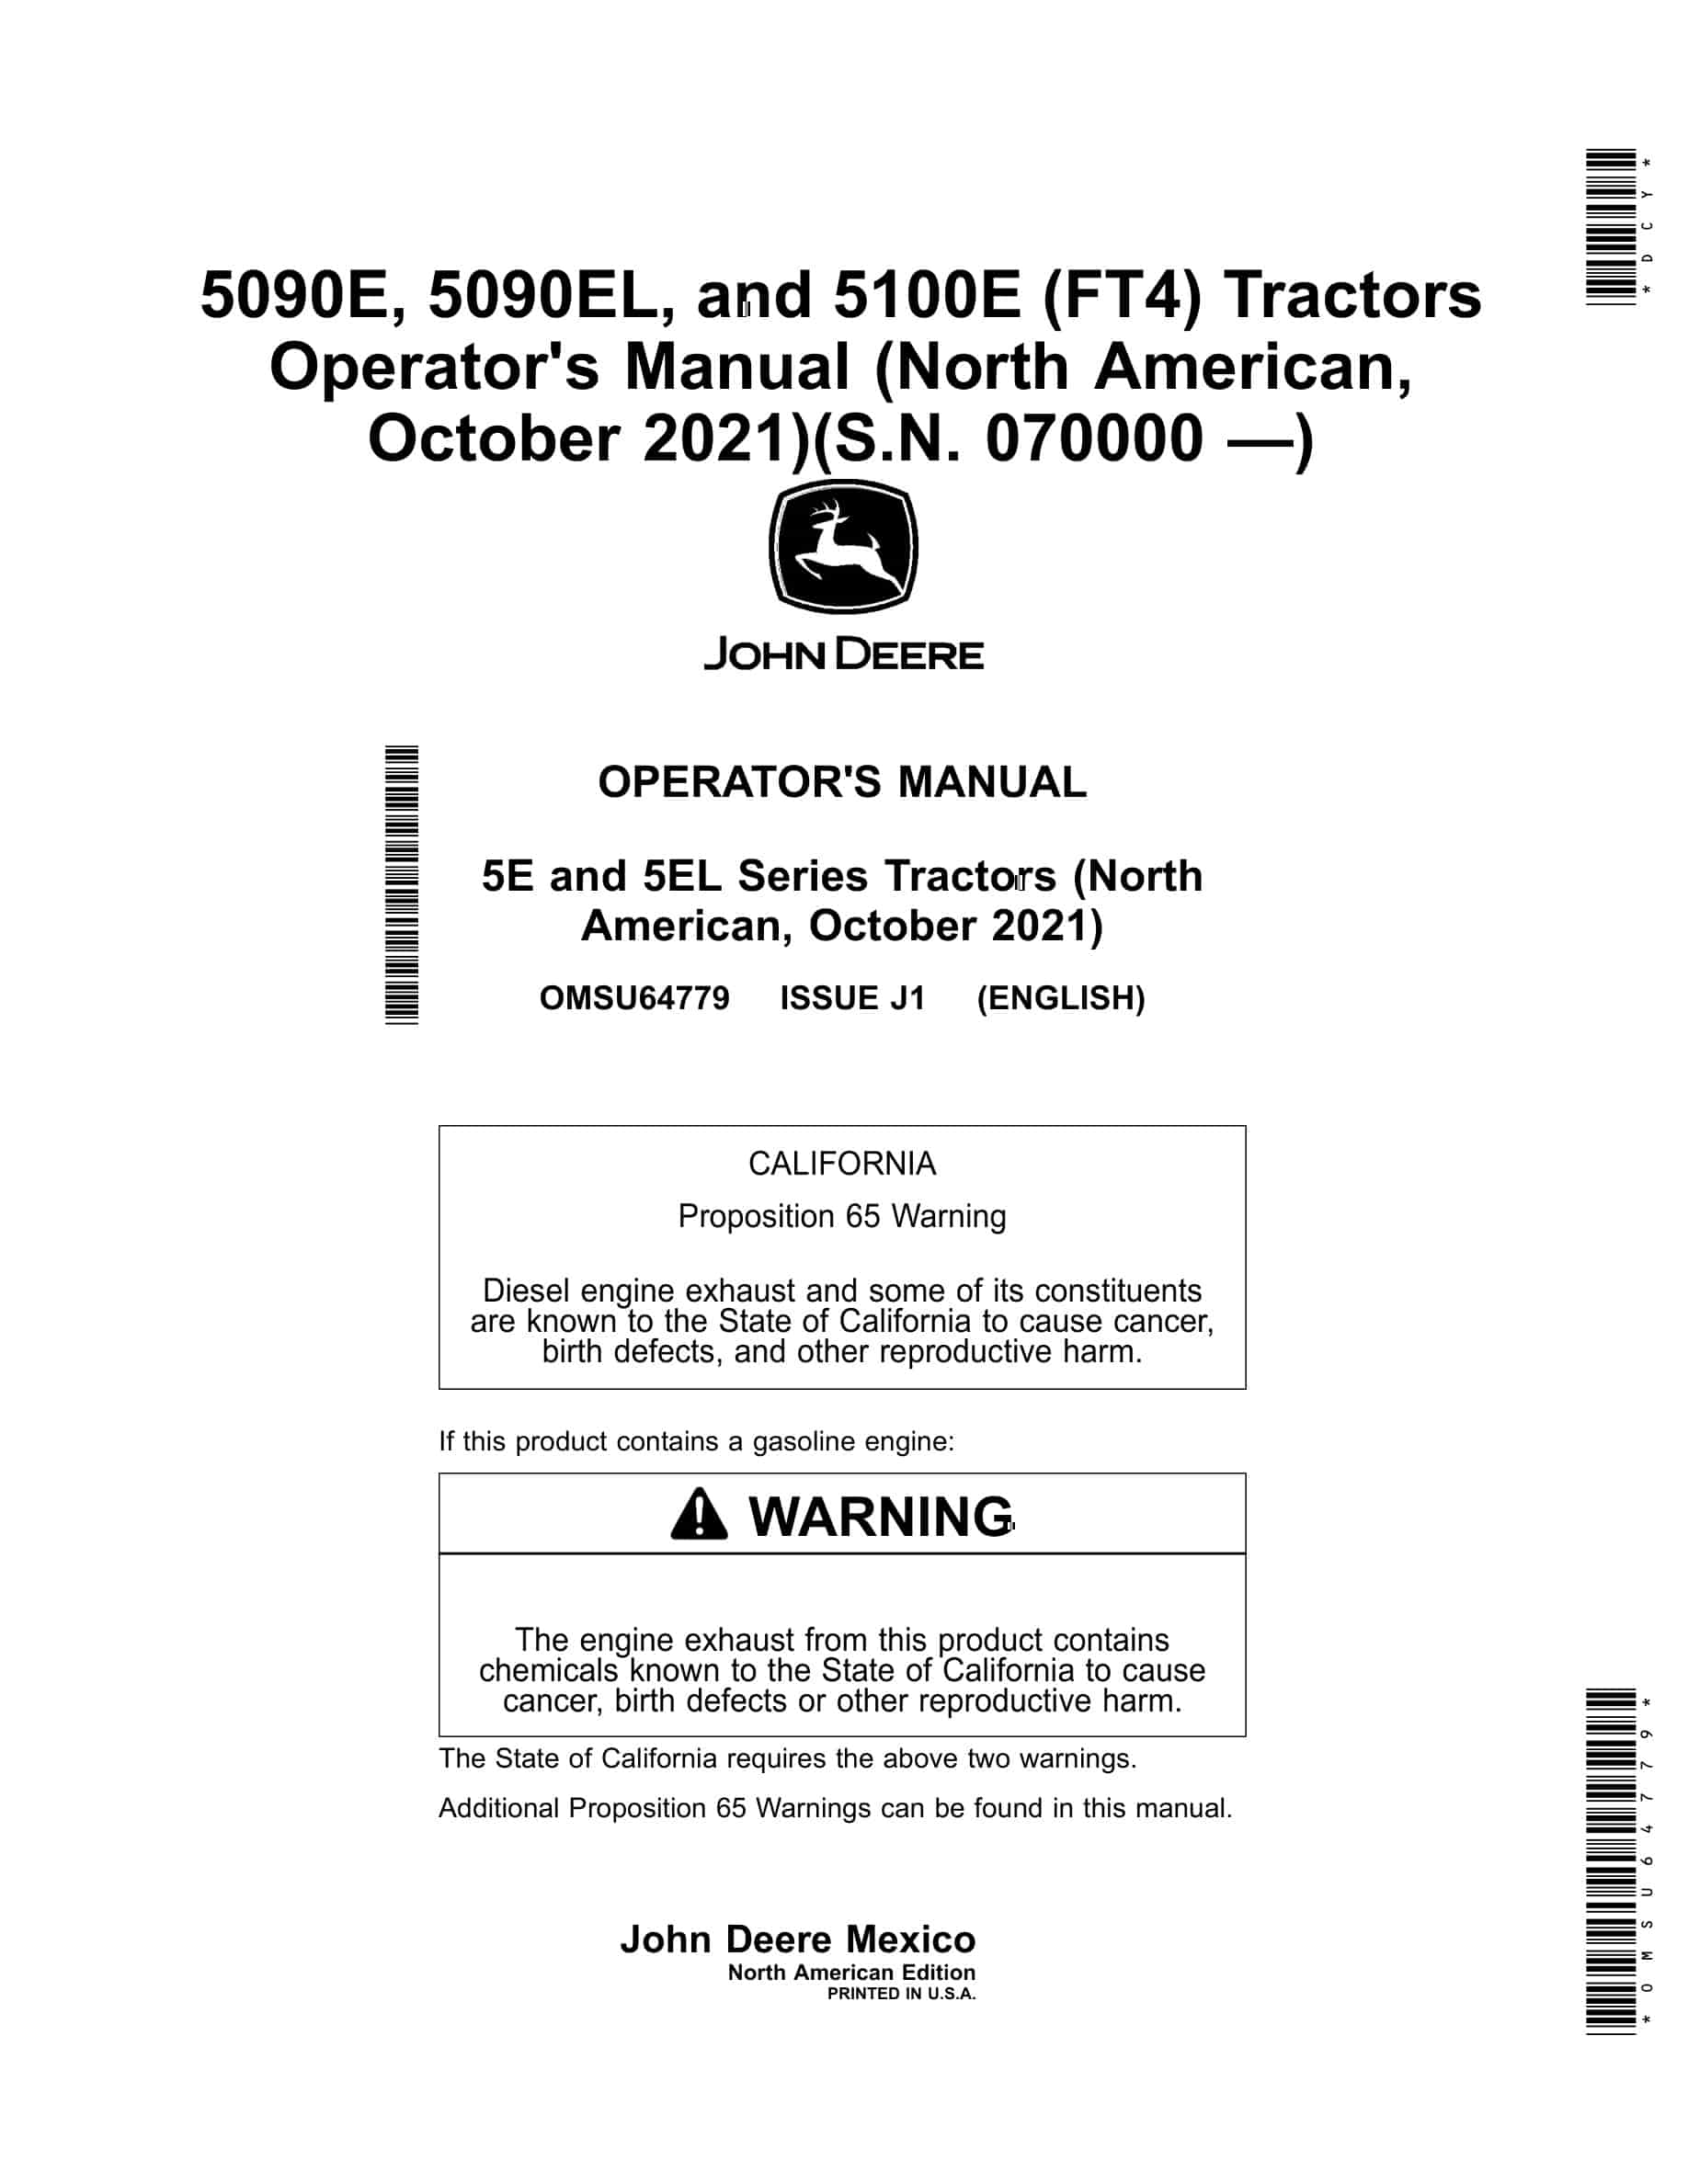 John Deere 5090E, 5090EL, and 5100E (FT4) Tractor Operator Manual OMSU64779-1